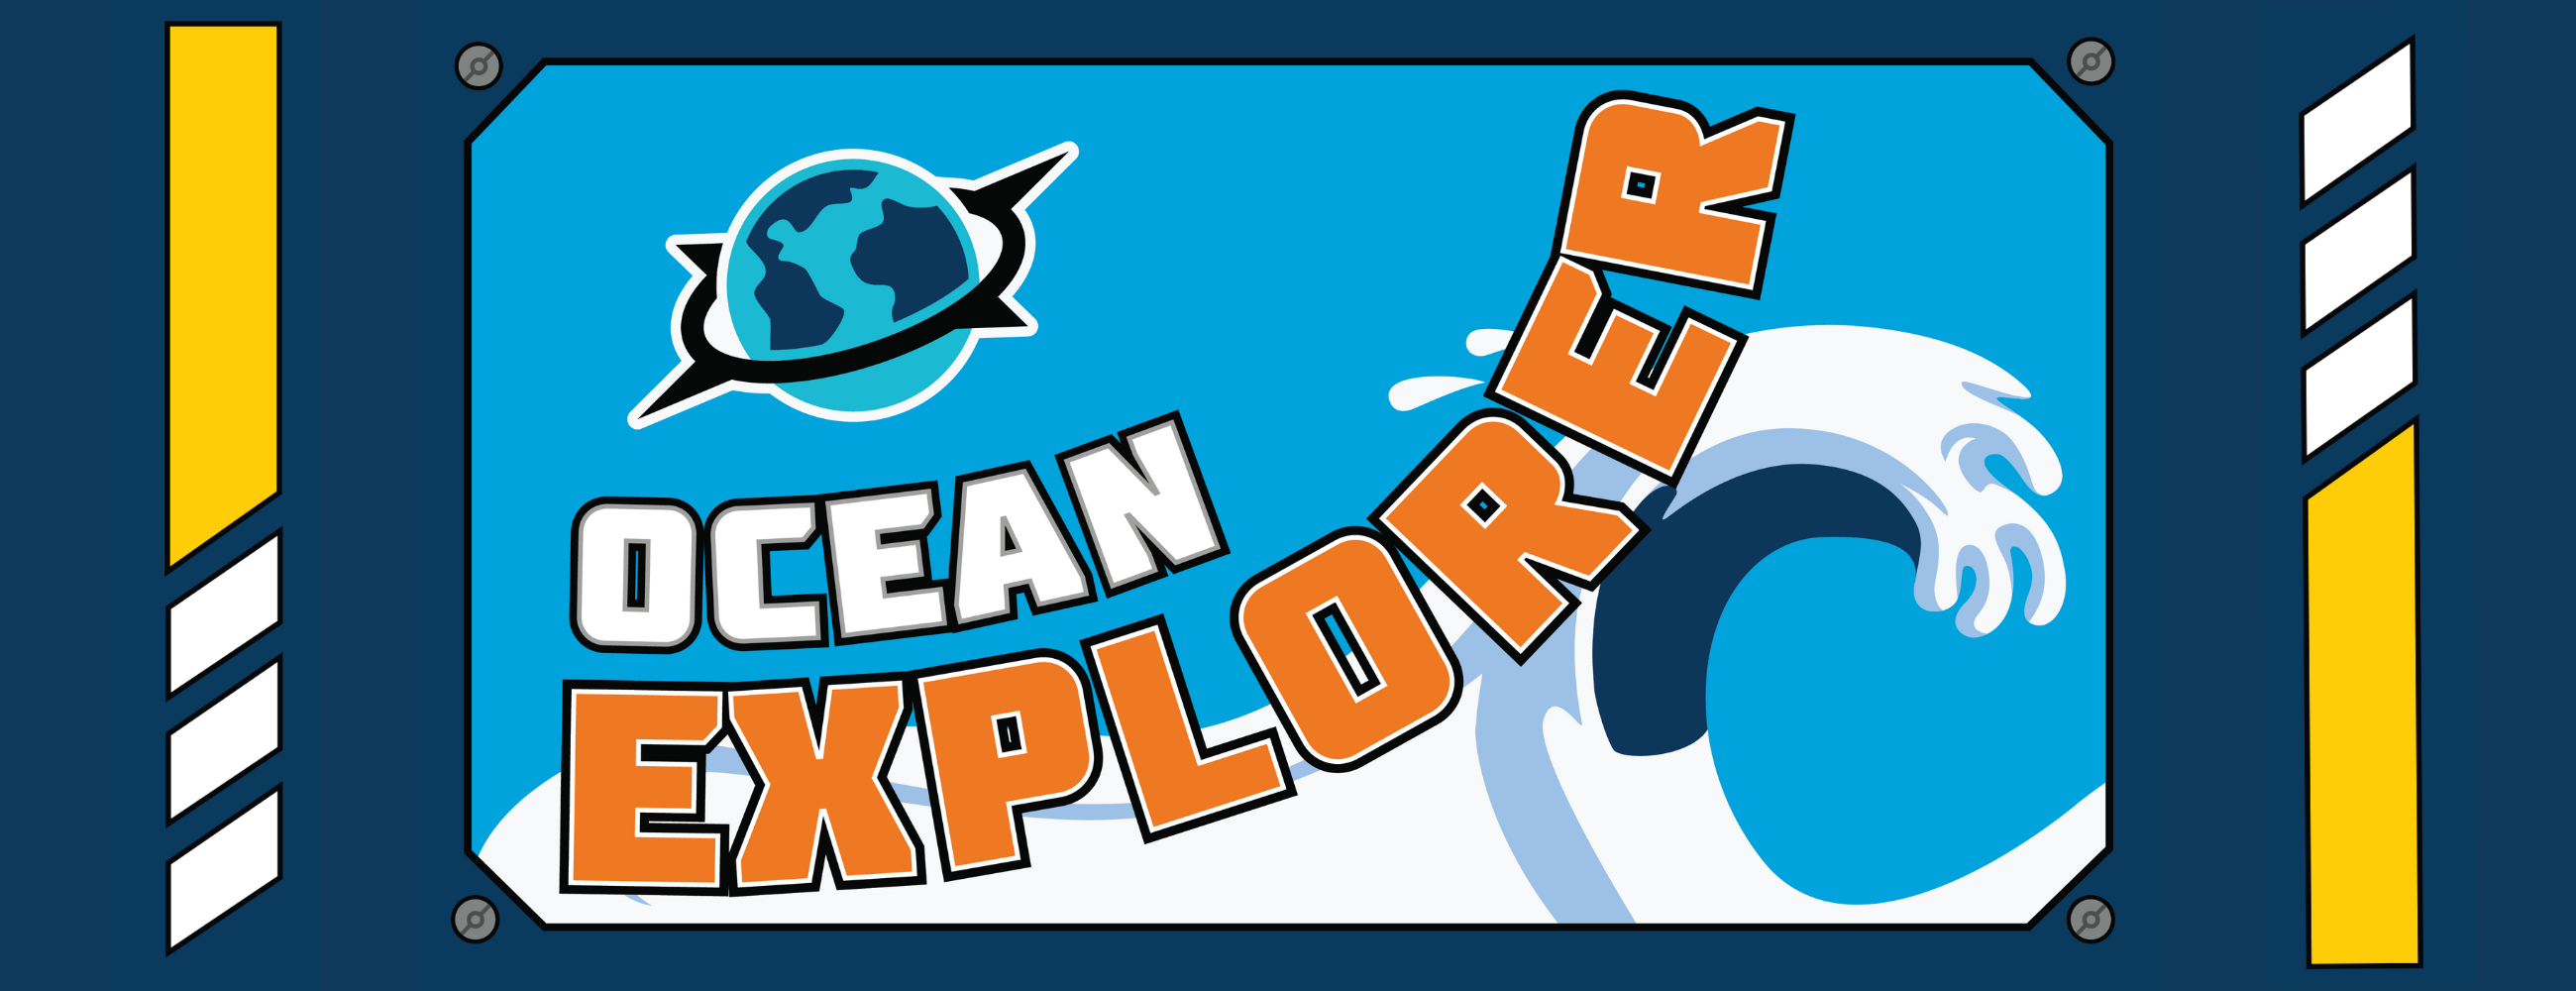 Ocean Explorer Ride Logo at Legoland New York